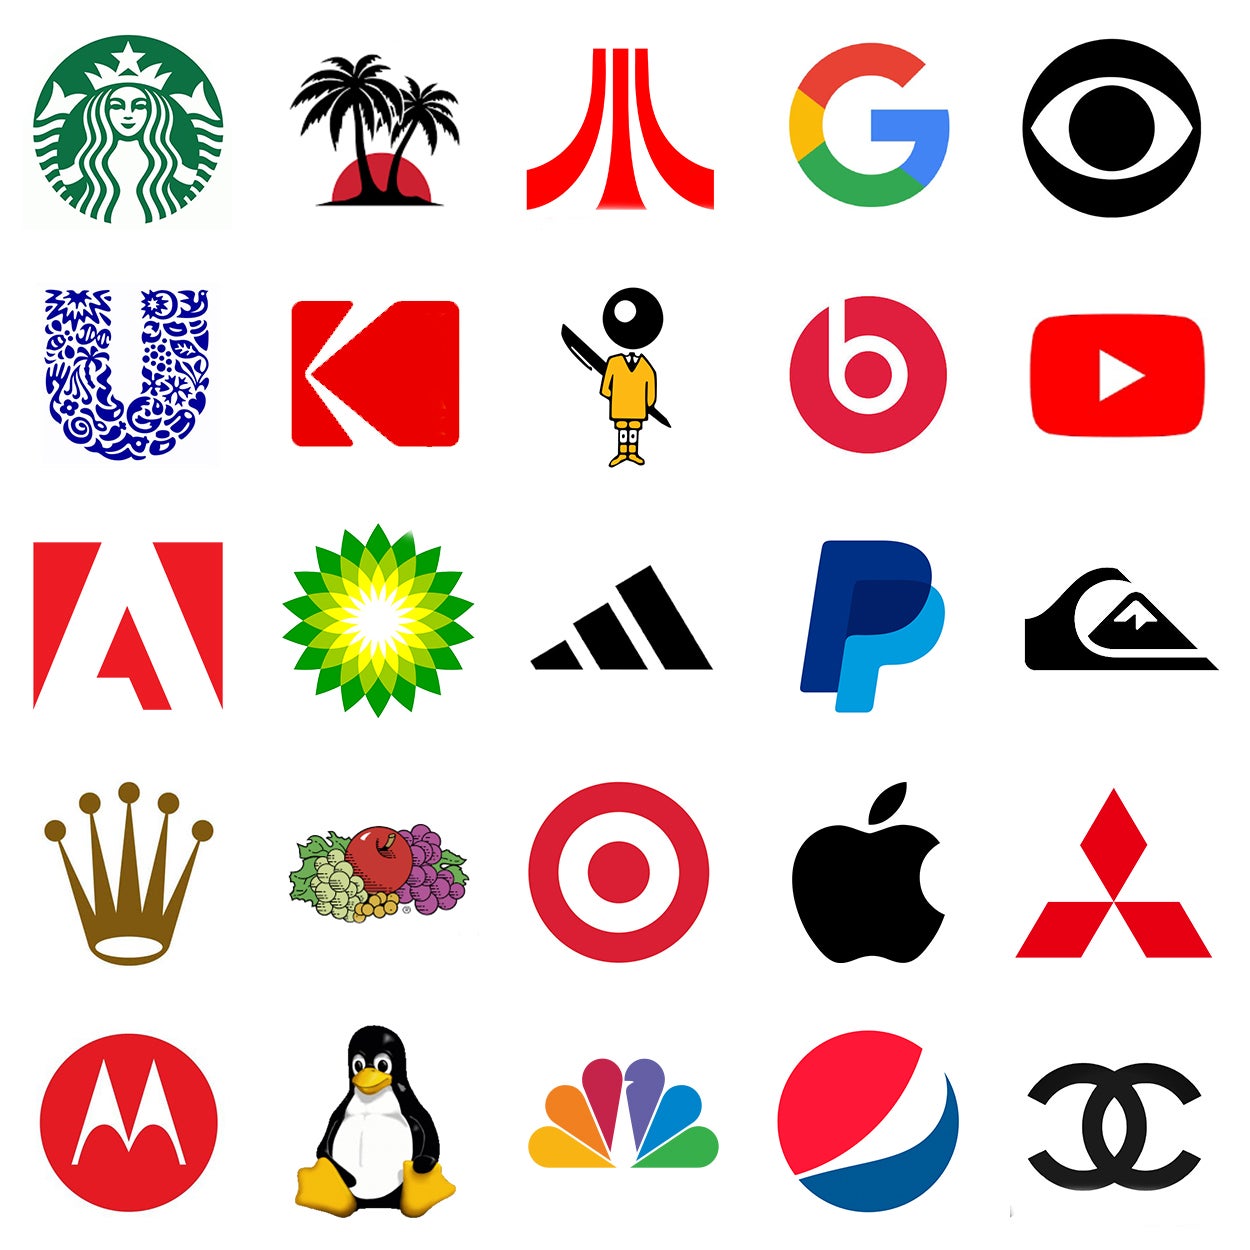 Free Online Logo Quiz: How Many Logos Do You Know?